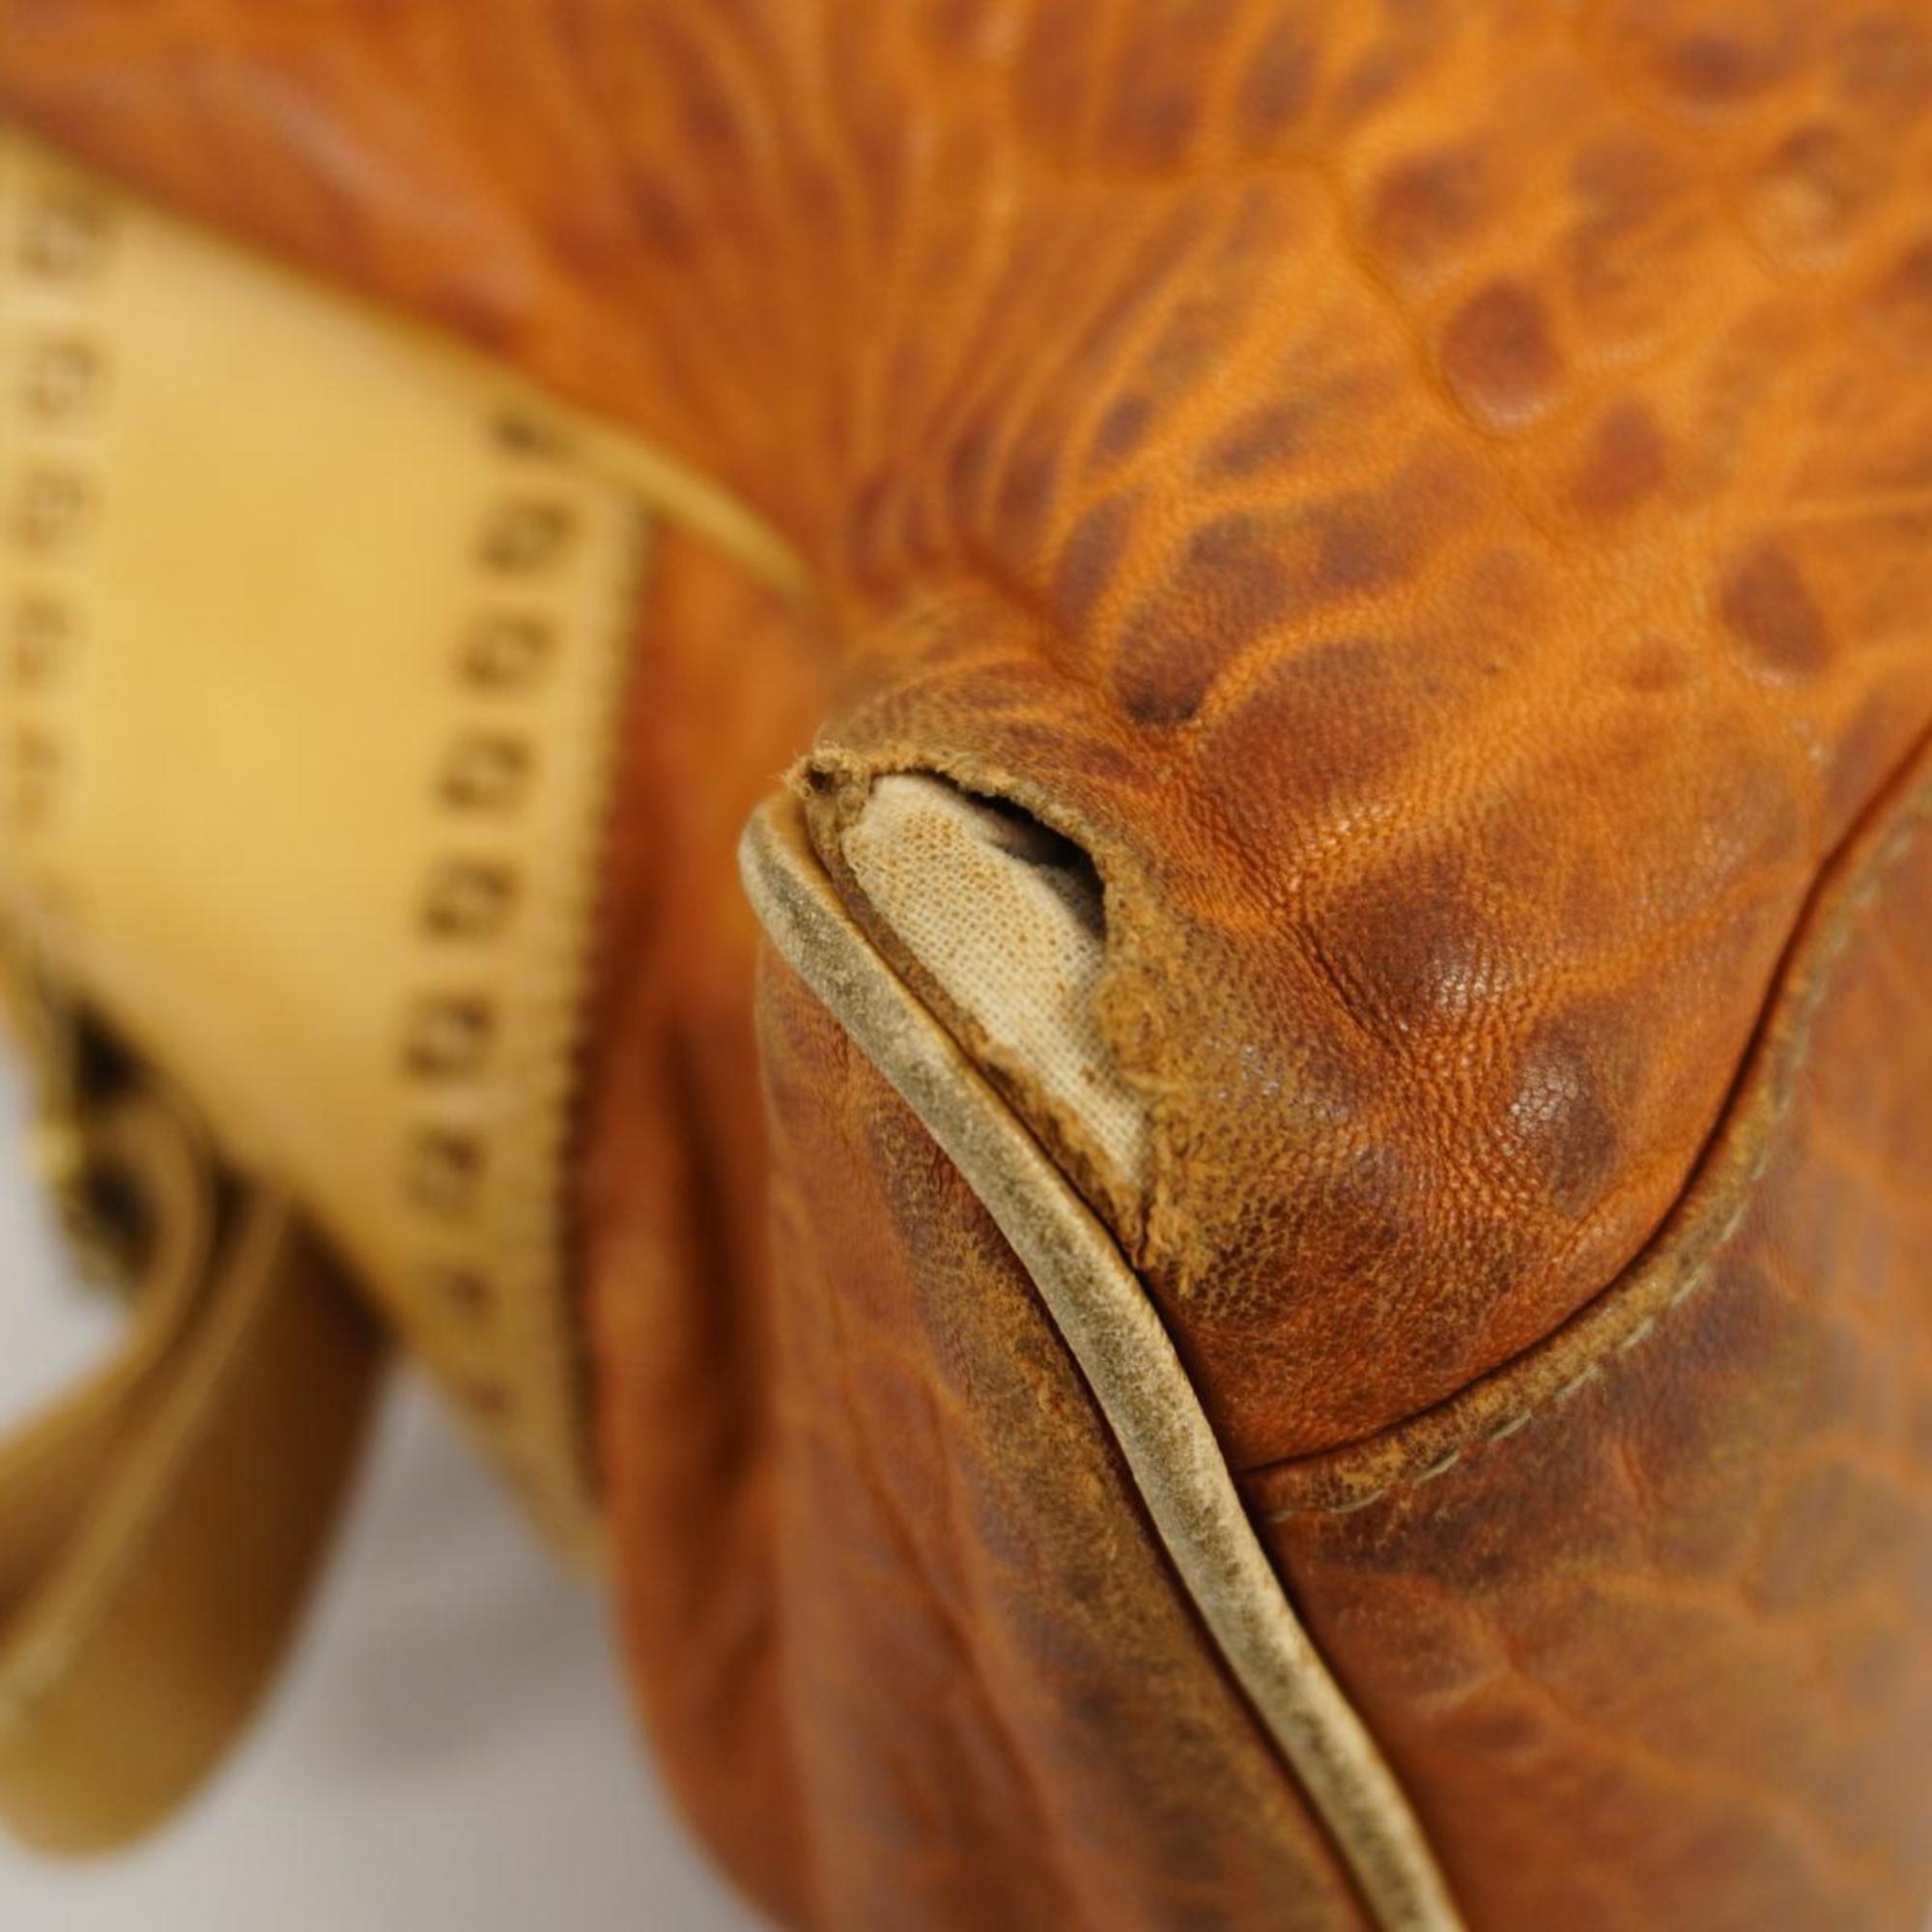 Fendi handbag leather brown ladies